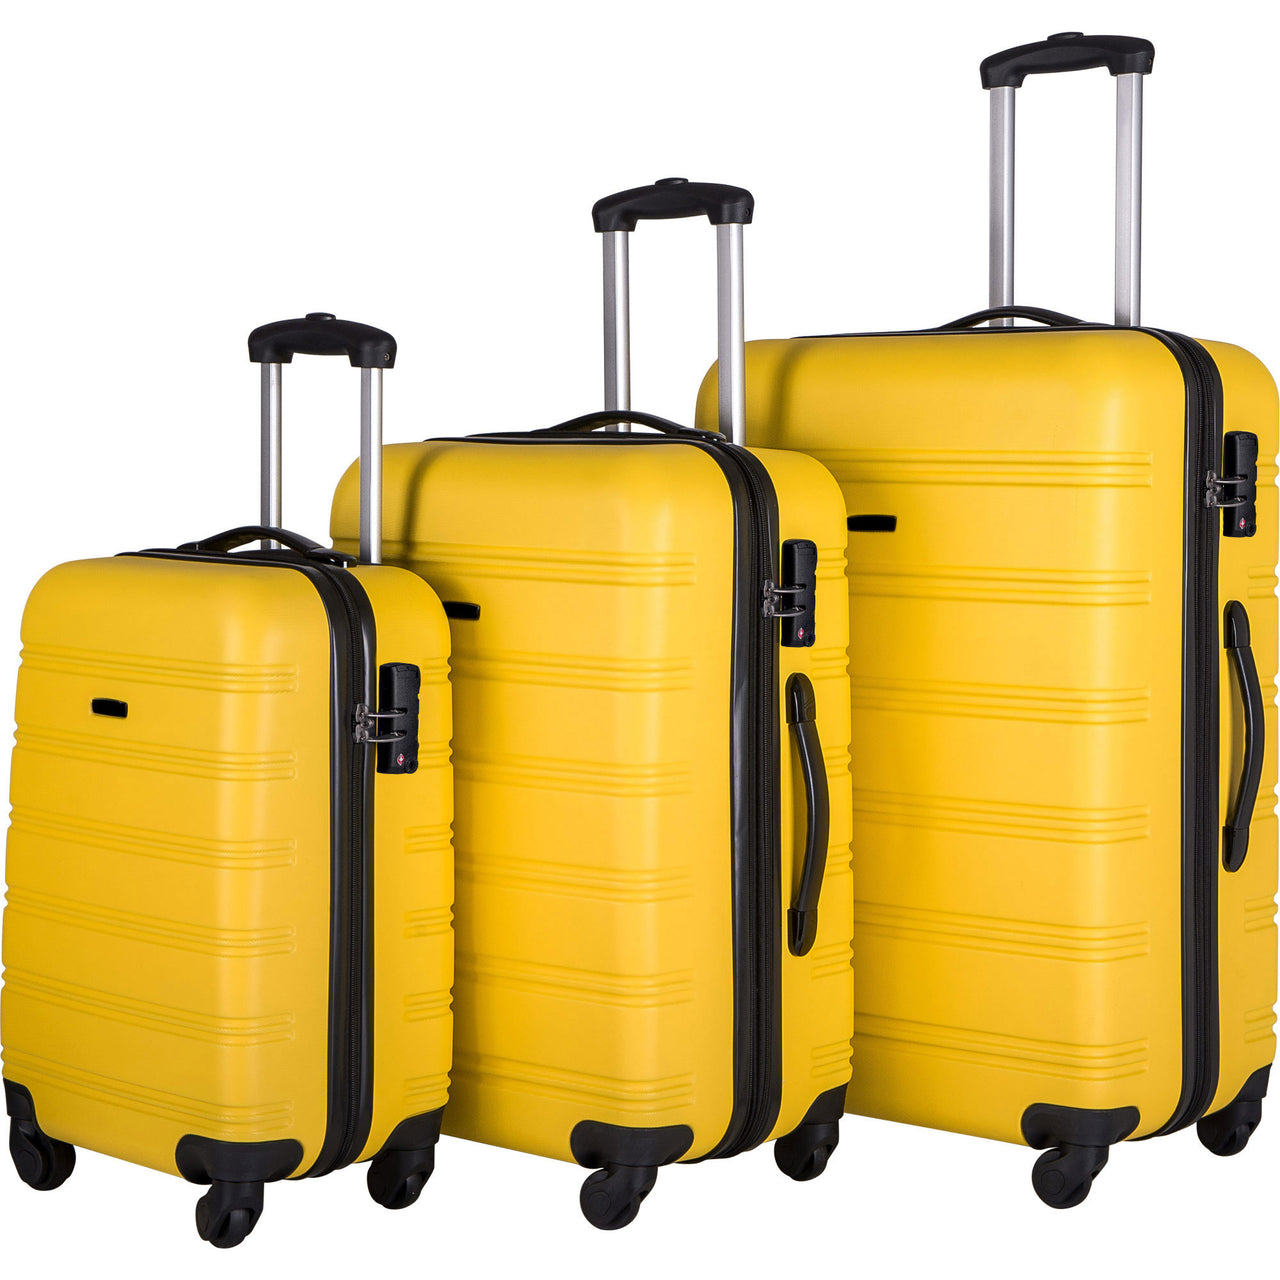 3 Piece Luggage Set Hardside Spinner Suitcase with TSA Lock 20& 24' 28& Available